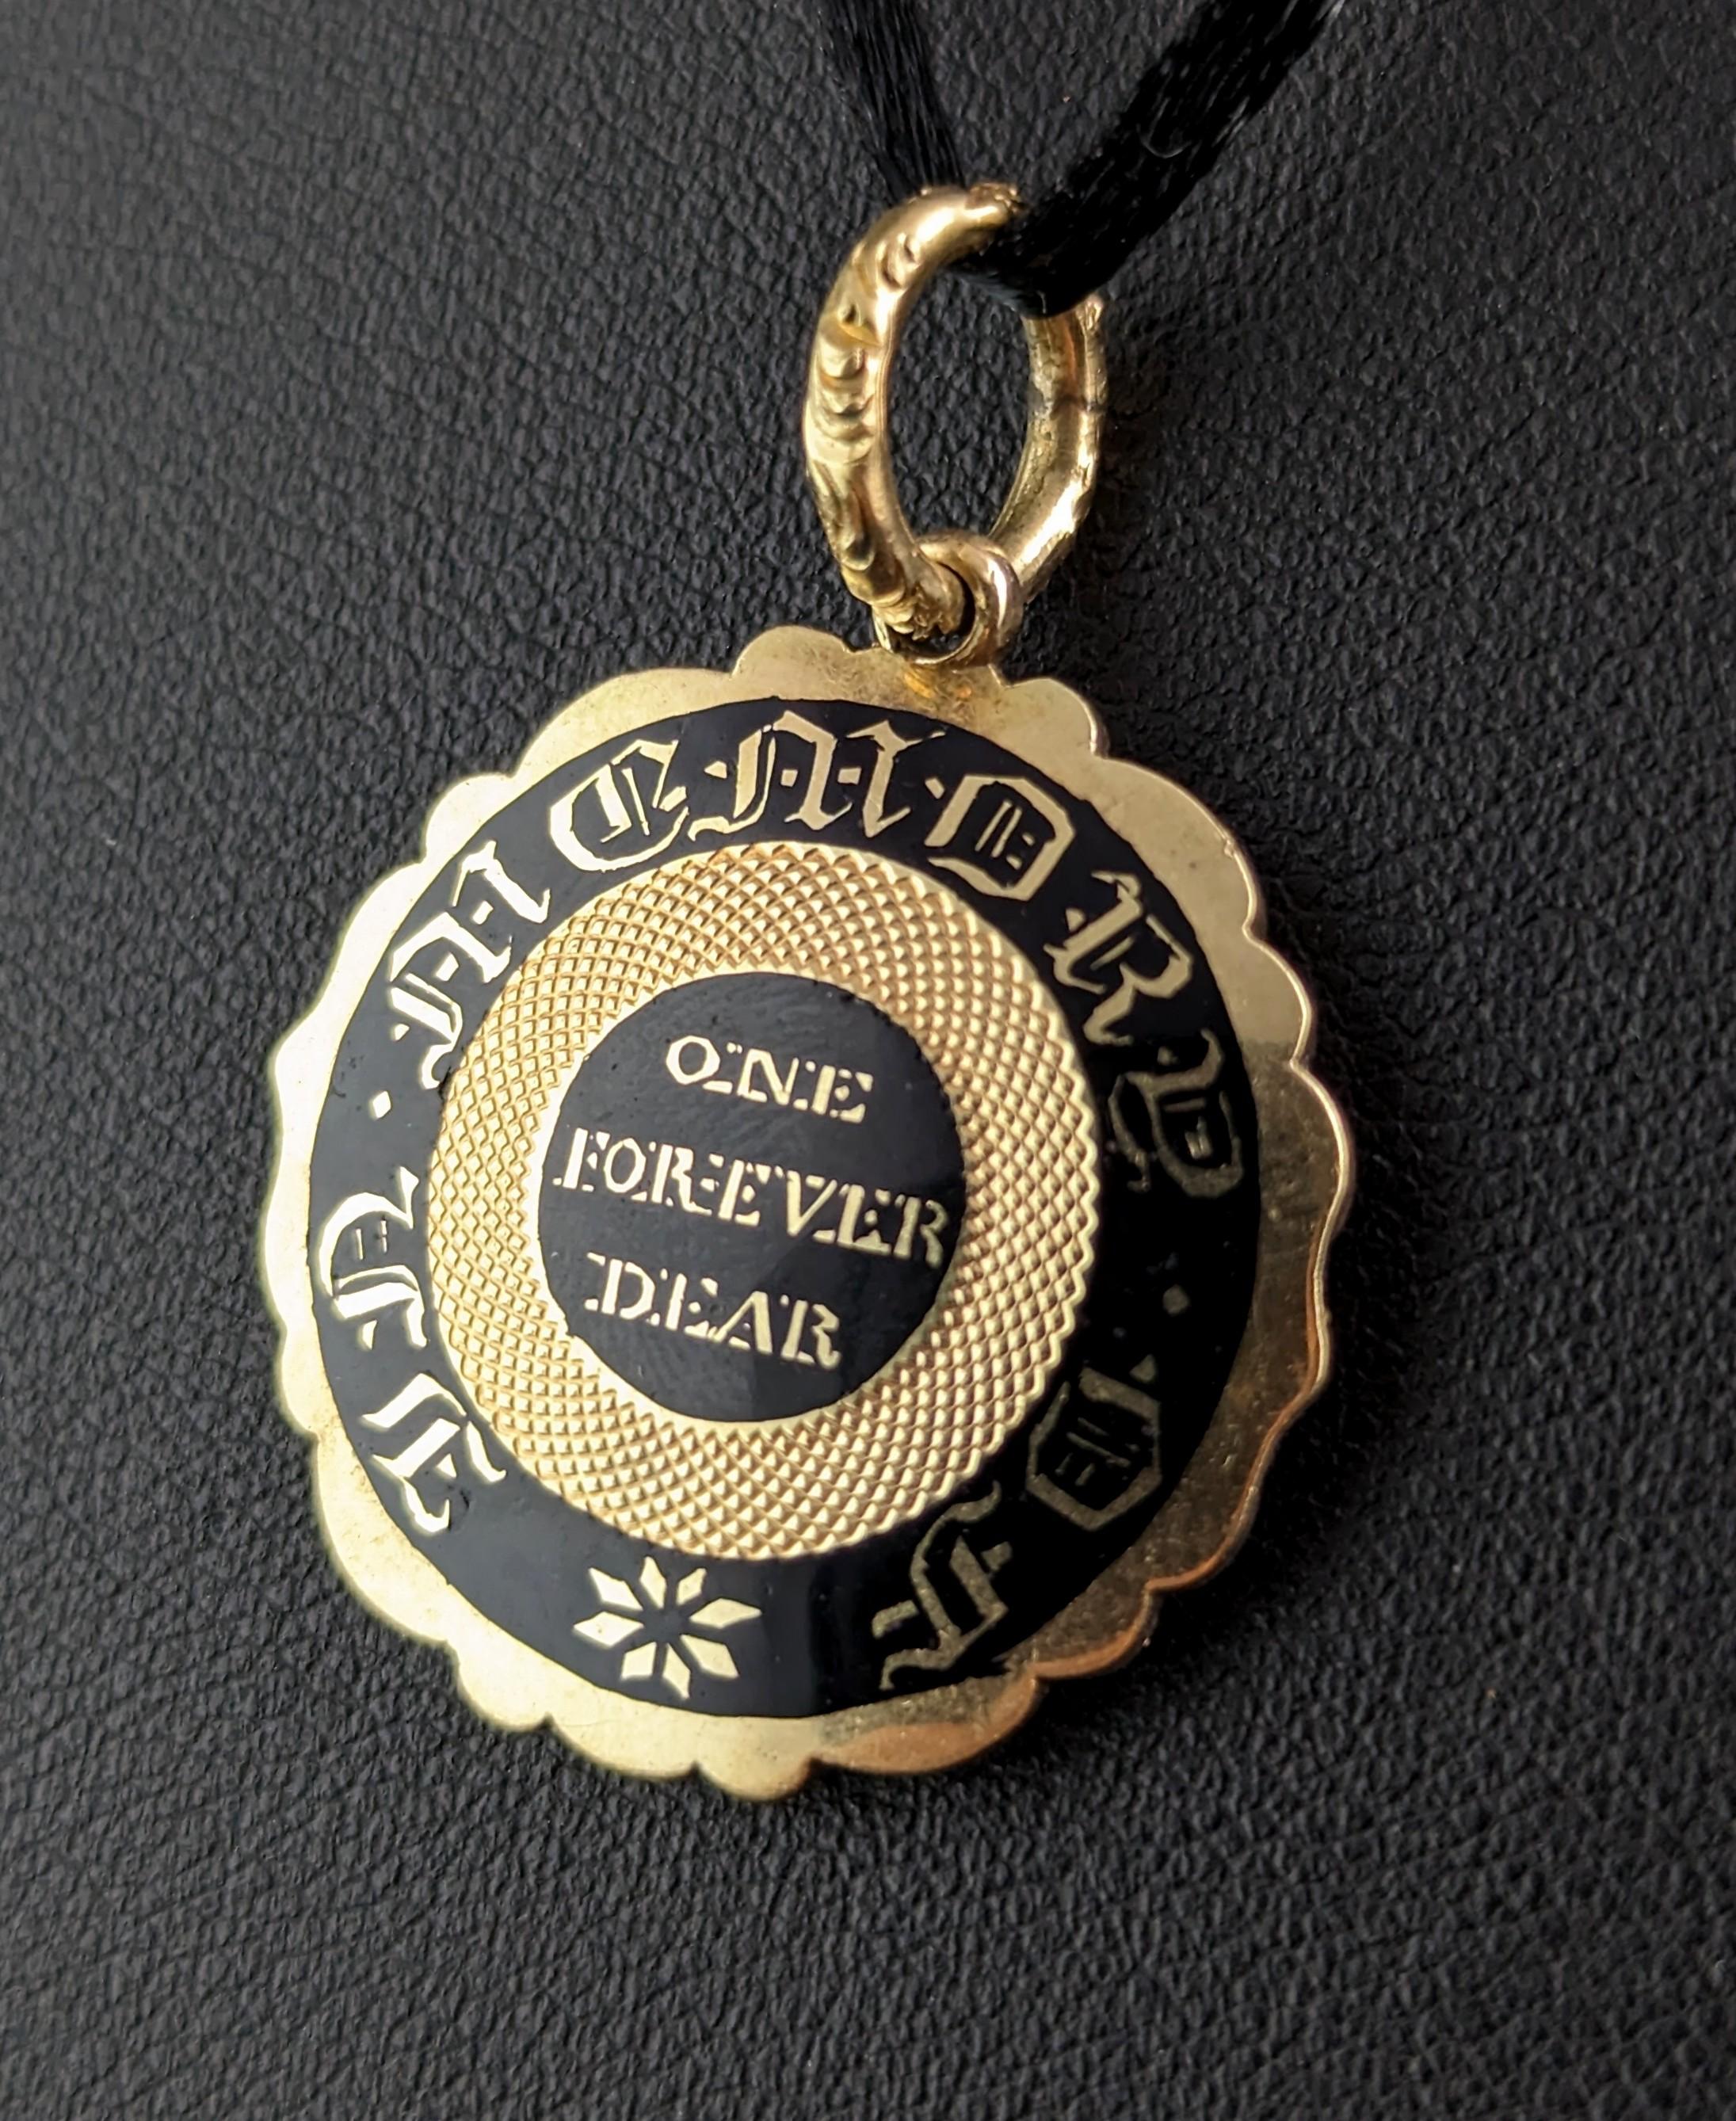 Antique Georgian mourning locket pendant, 9k gold and black enamel  6